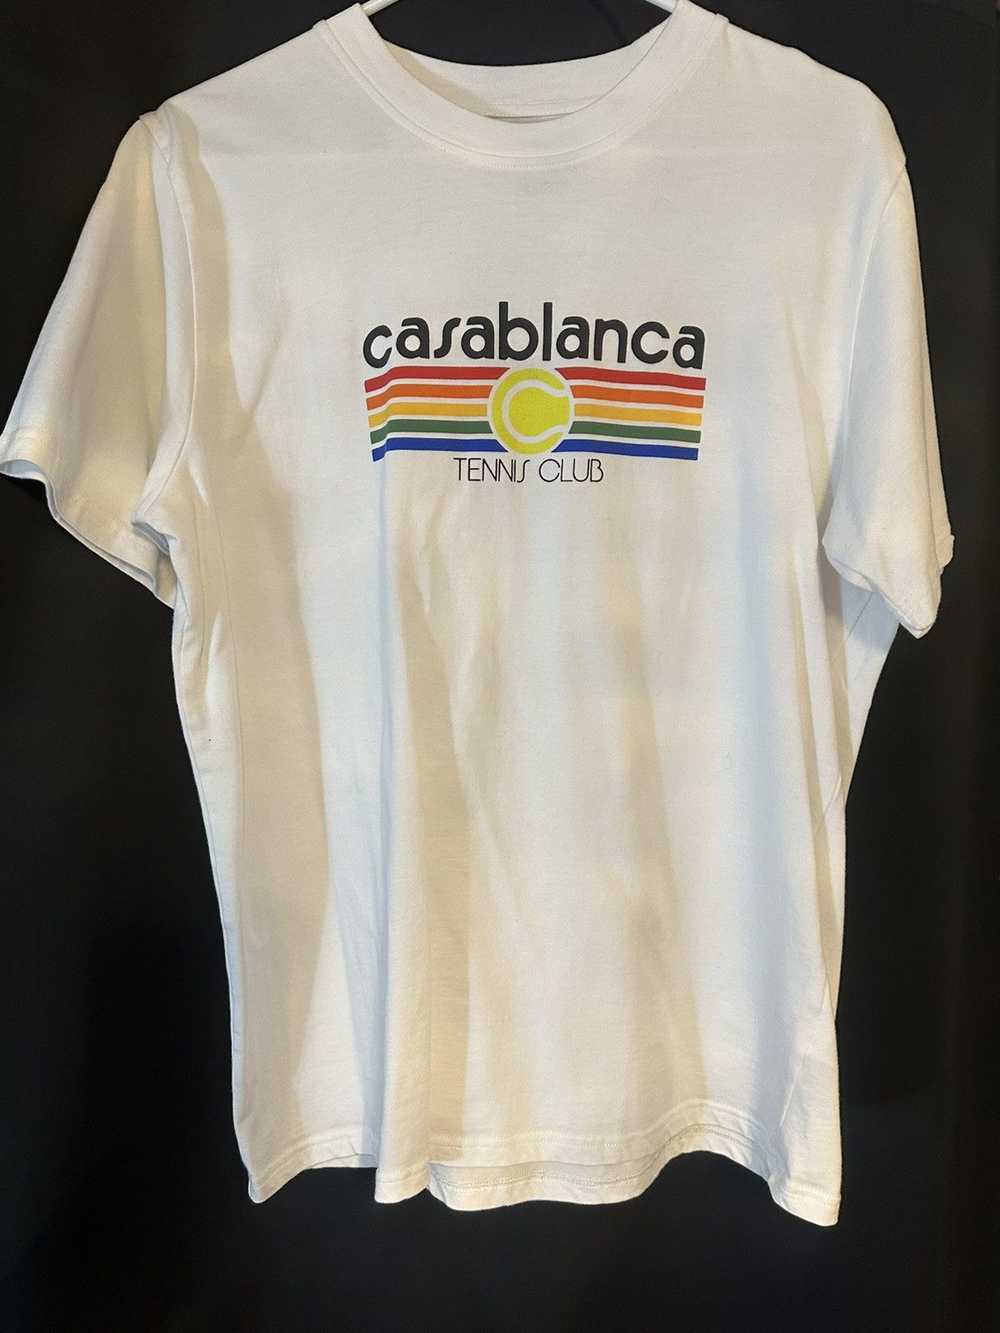 Casablanca Casablanca tennis club t shirt - image 2